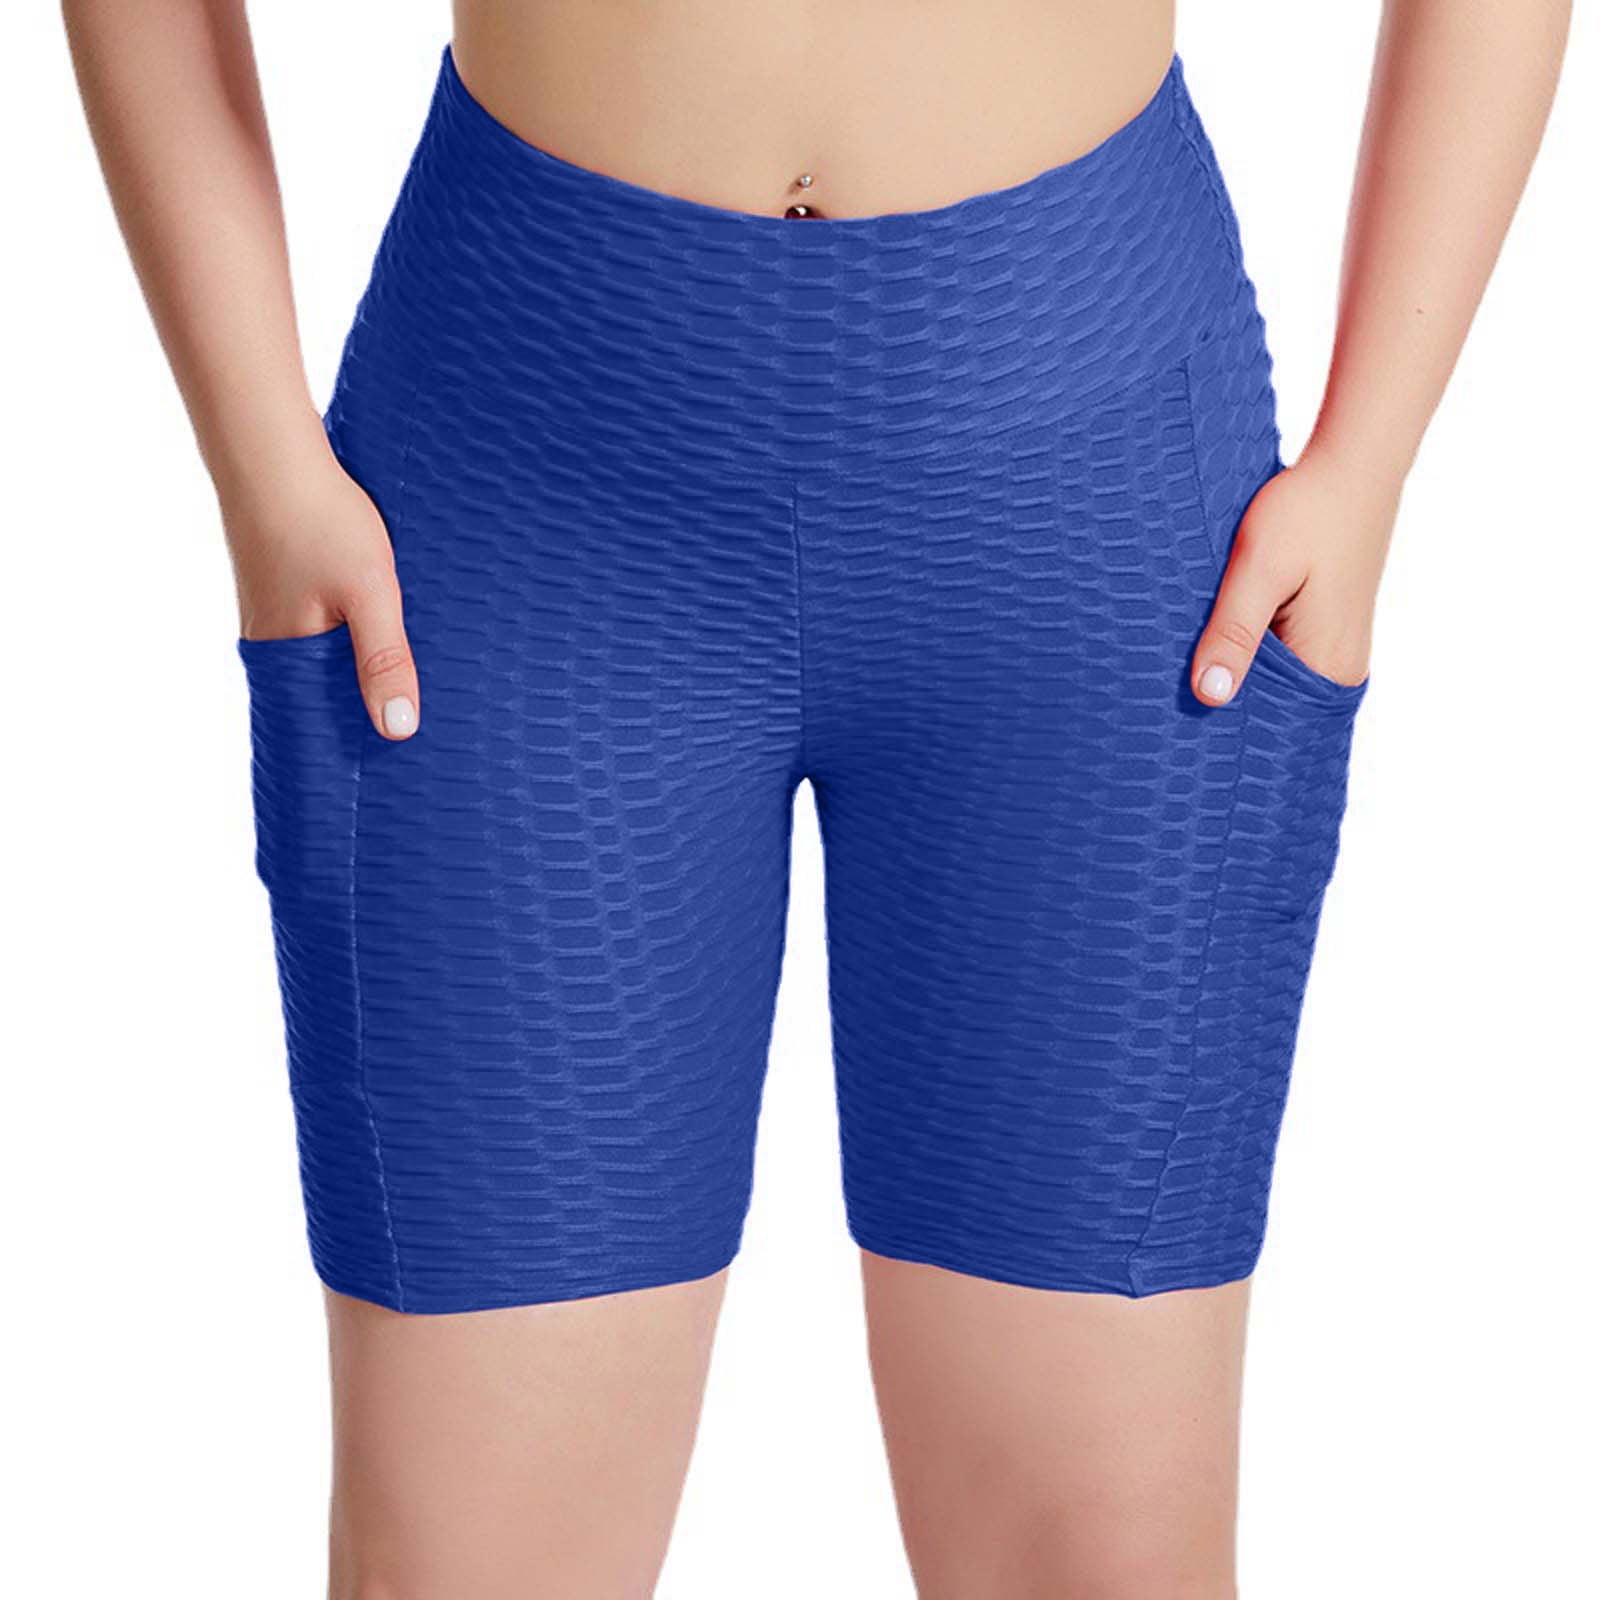 Details about   Women Yoga Shorts Cycling Sports Bottom Butt Lift High Waist Fitness Hot Pants 